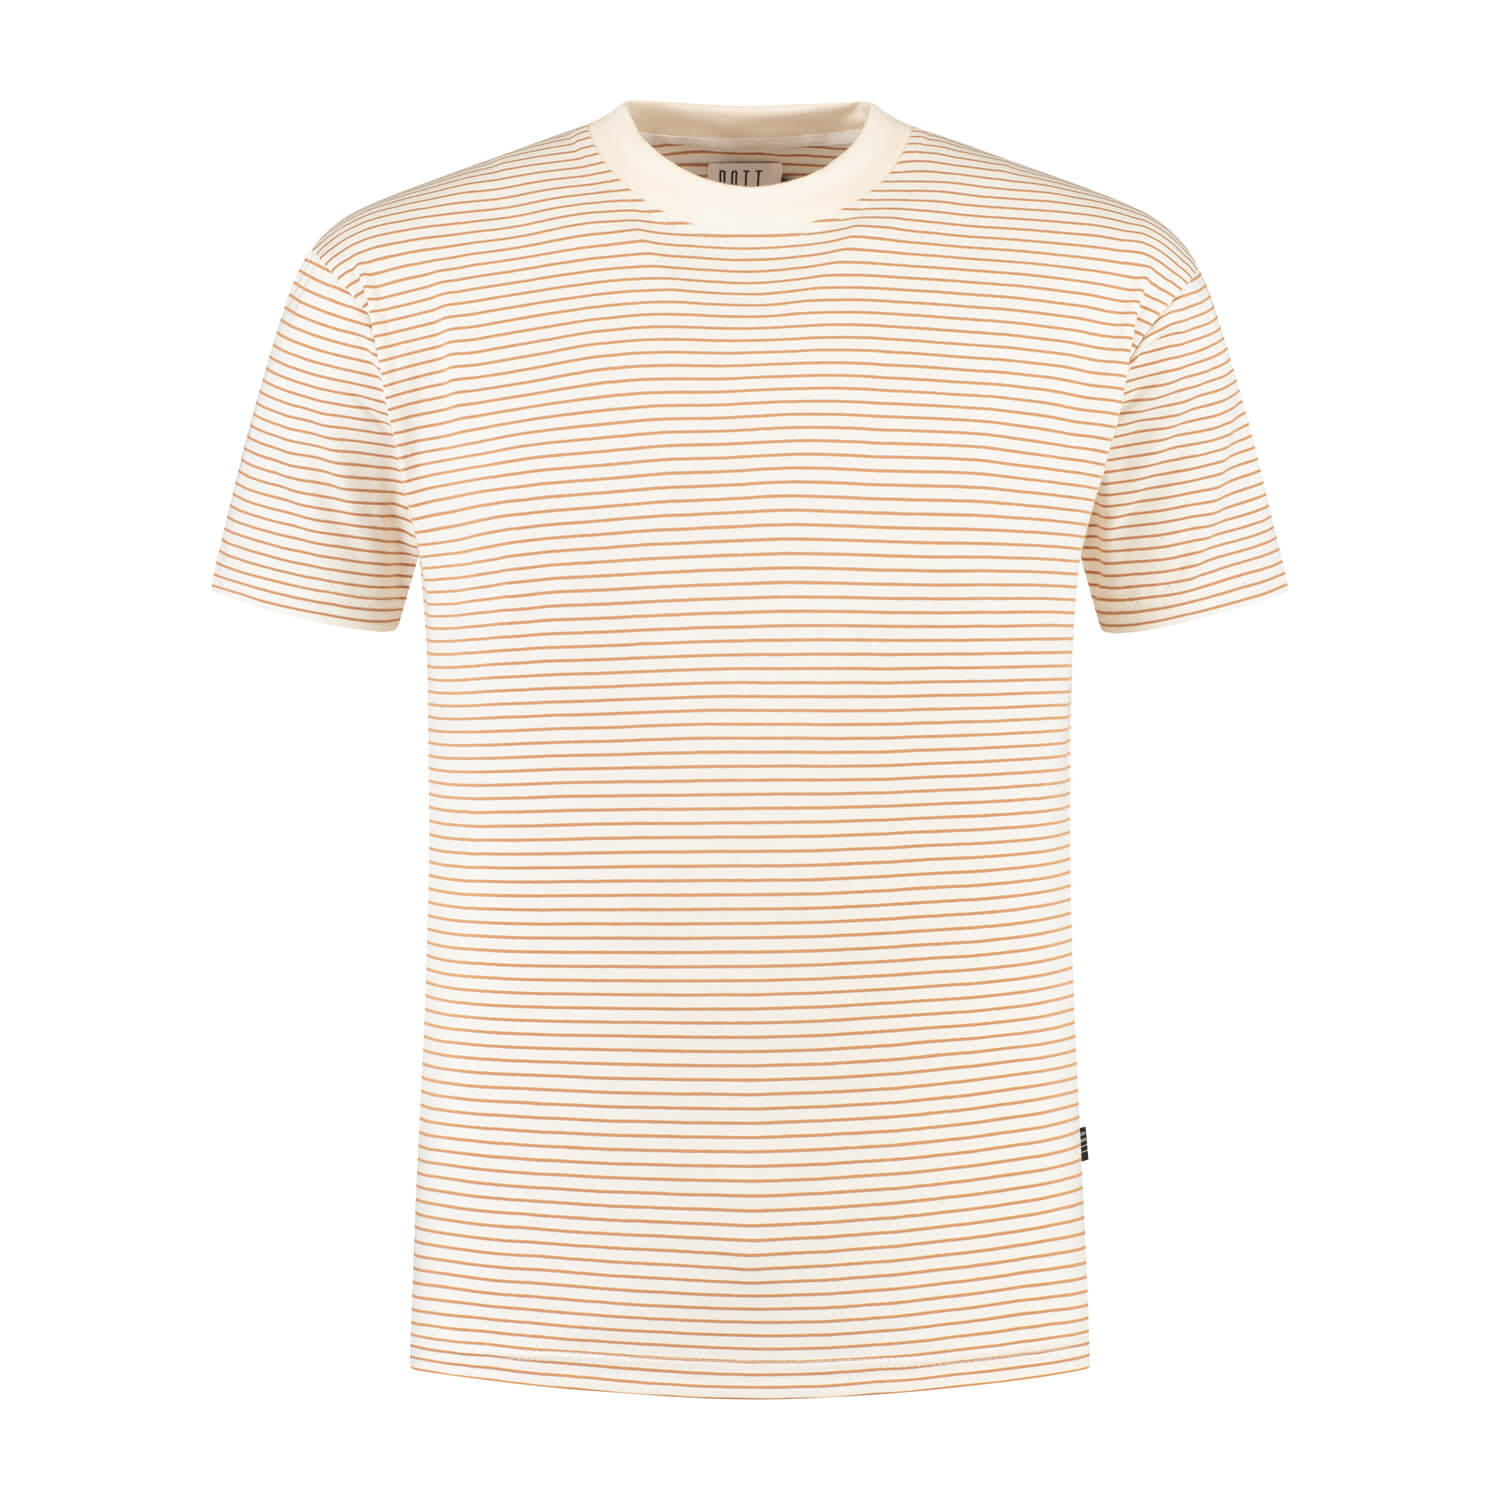 Men's organic essential striped t-shirt - Almond